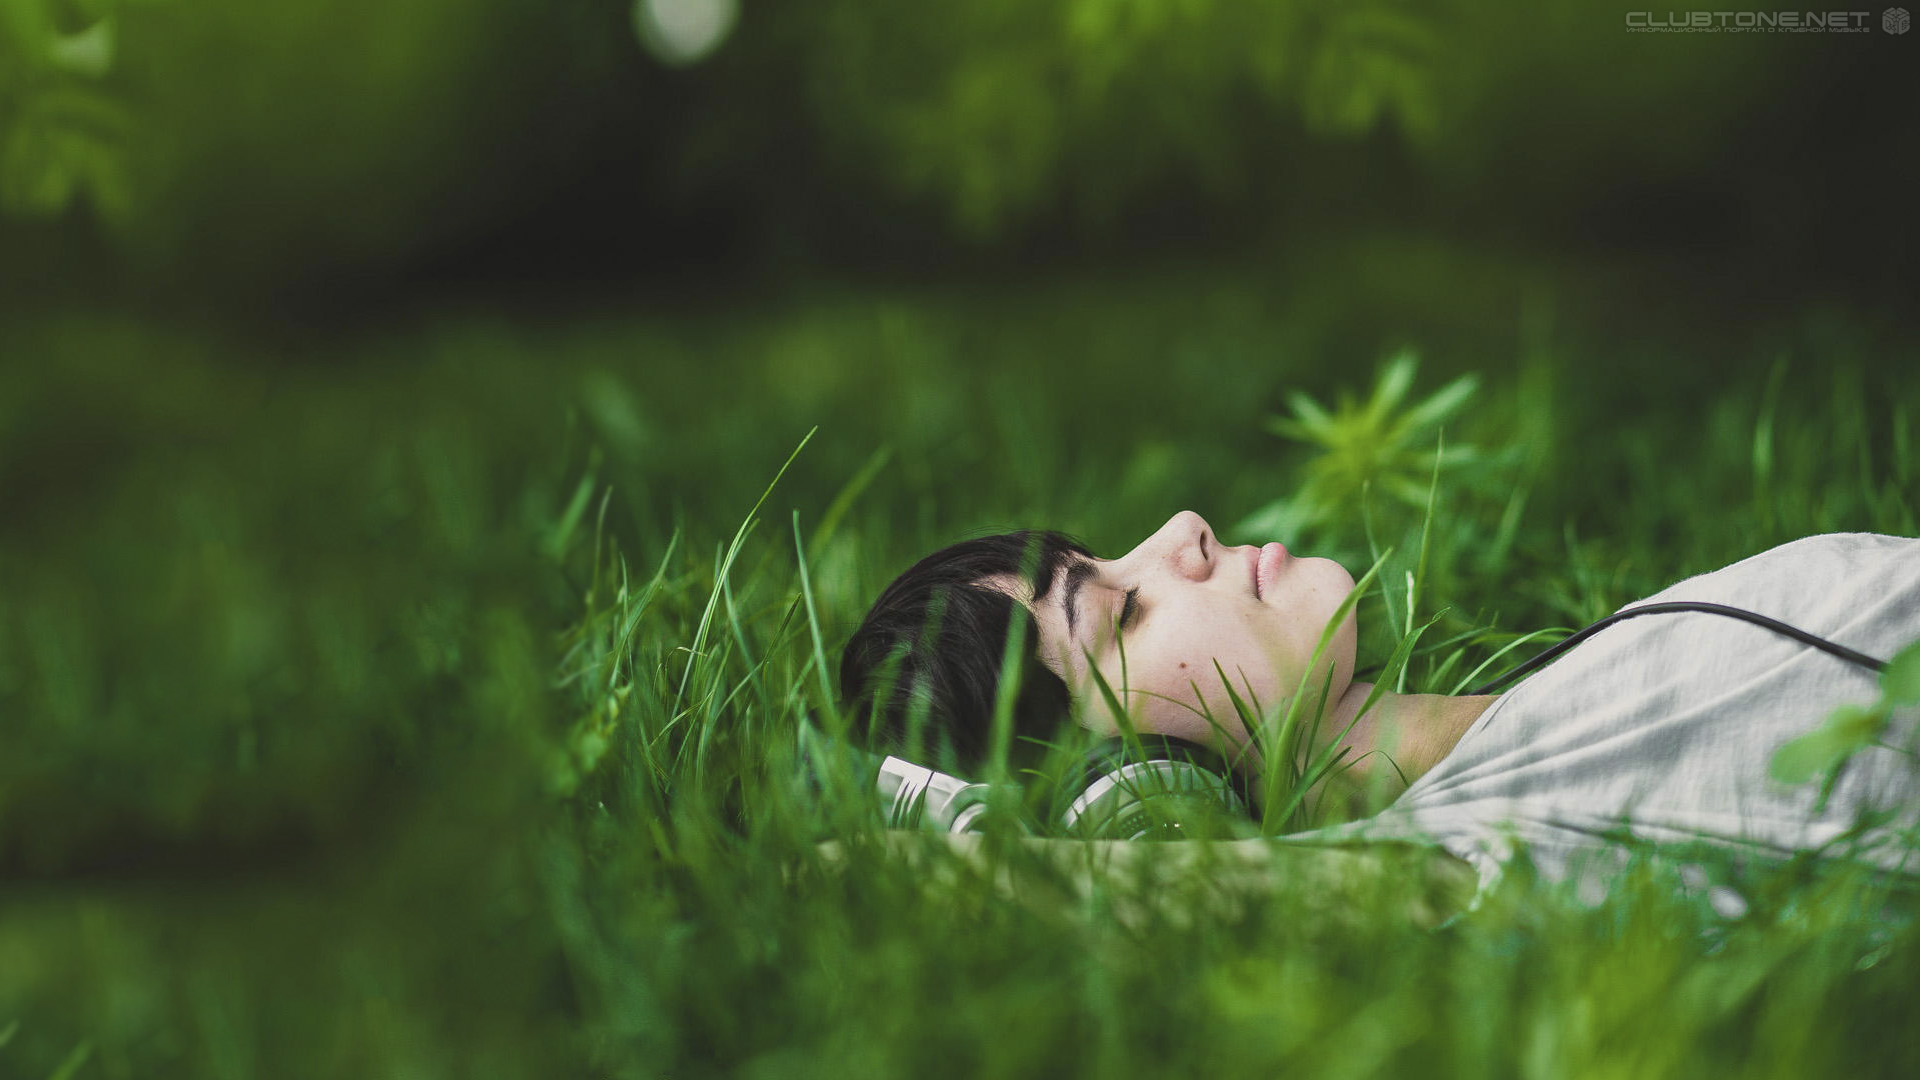 Лоскутова релакс. Лежит на траве. Девушка лежит на траве. Человек лежит на траве. Расслабление на природе.